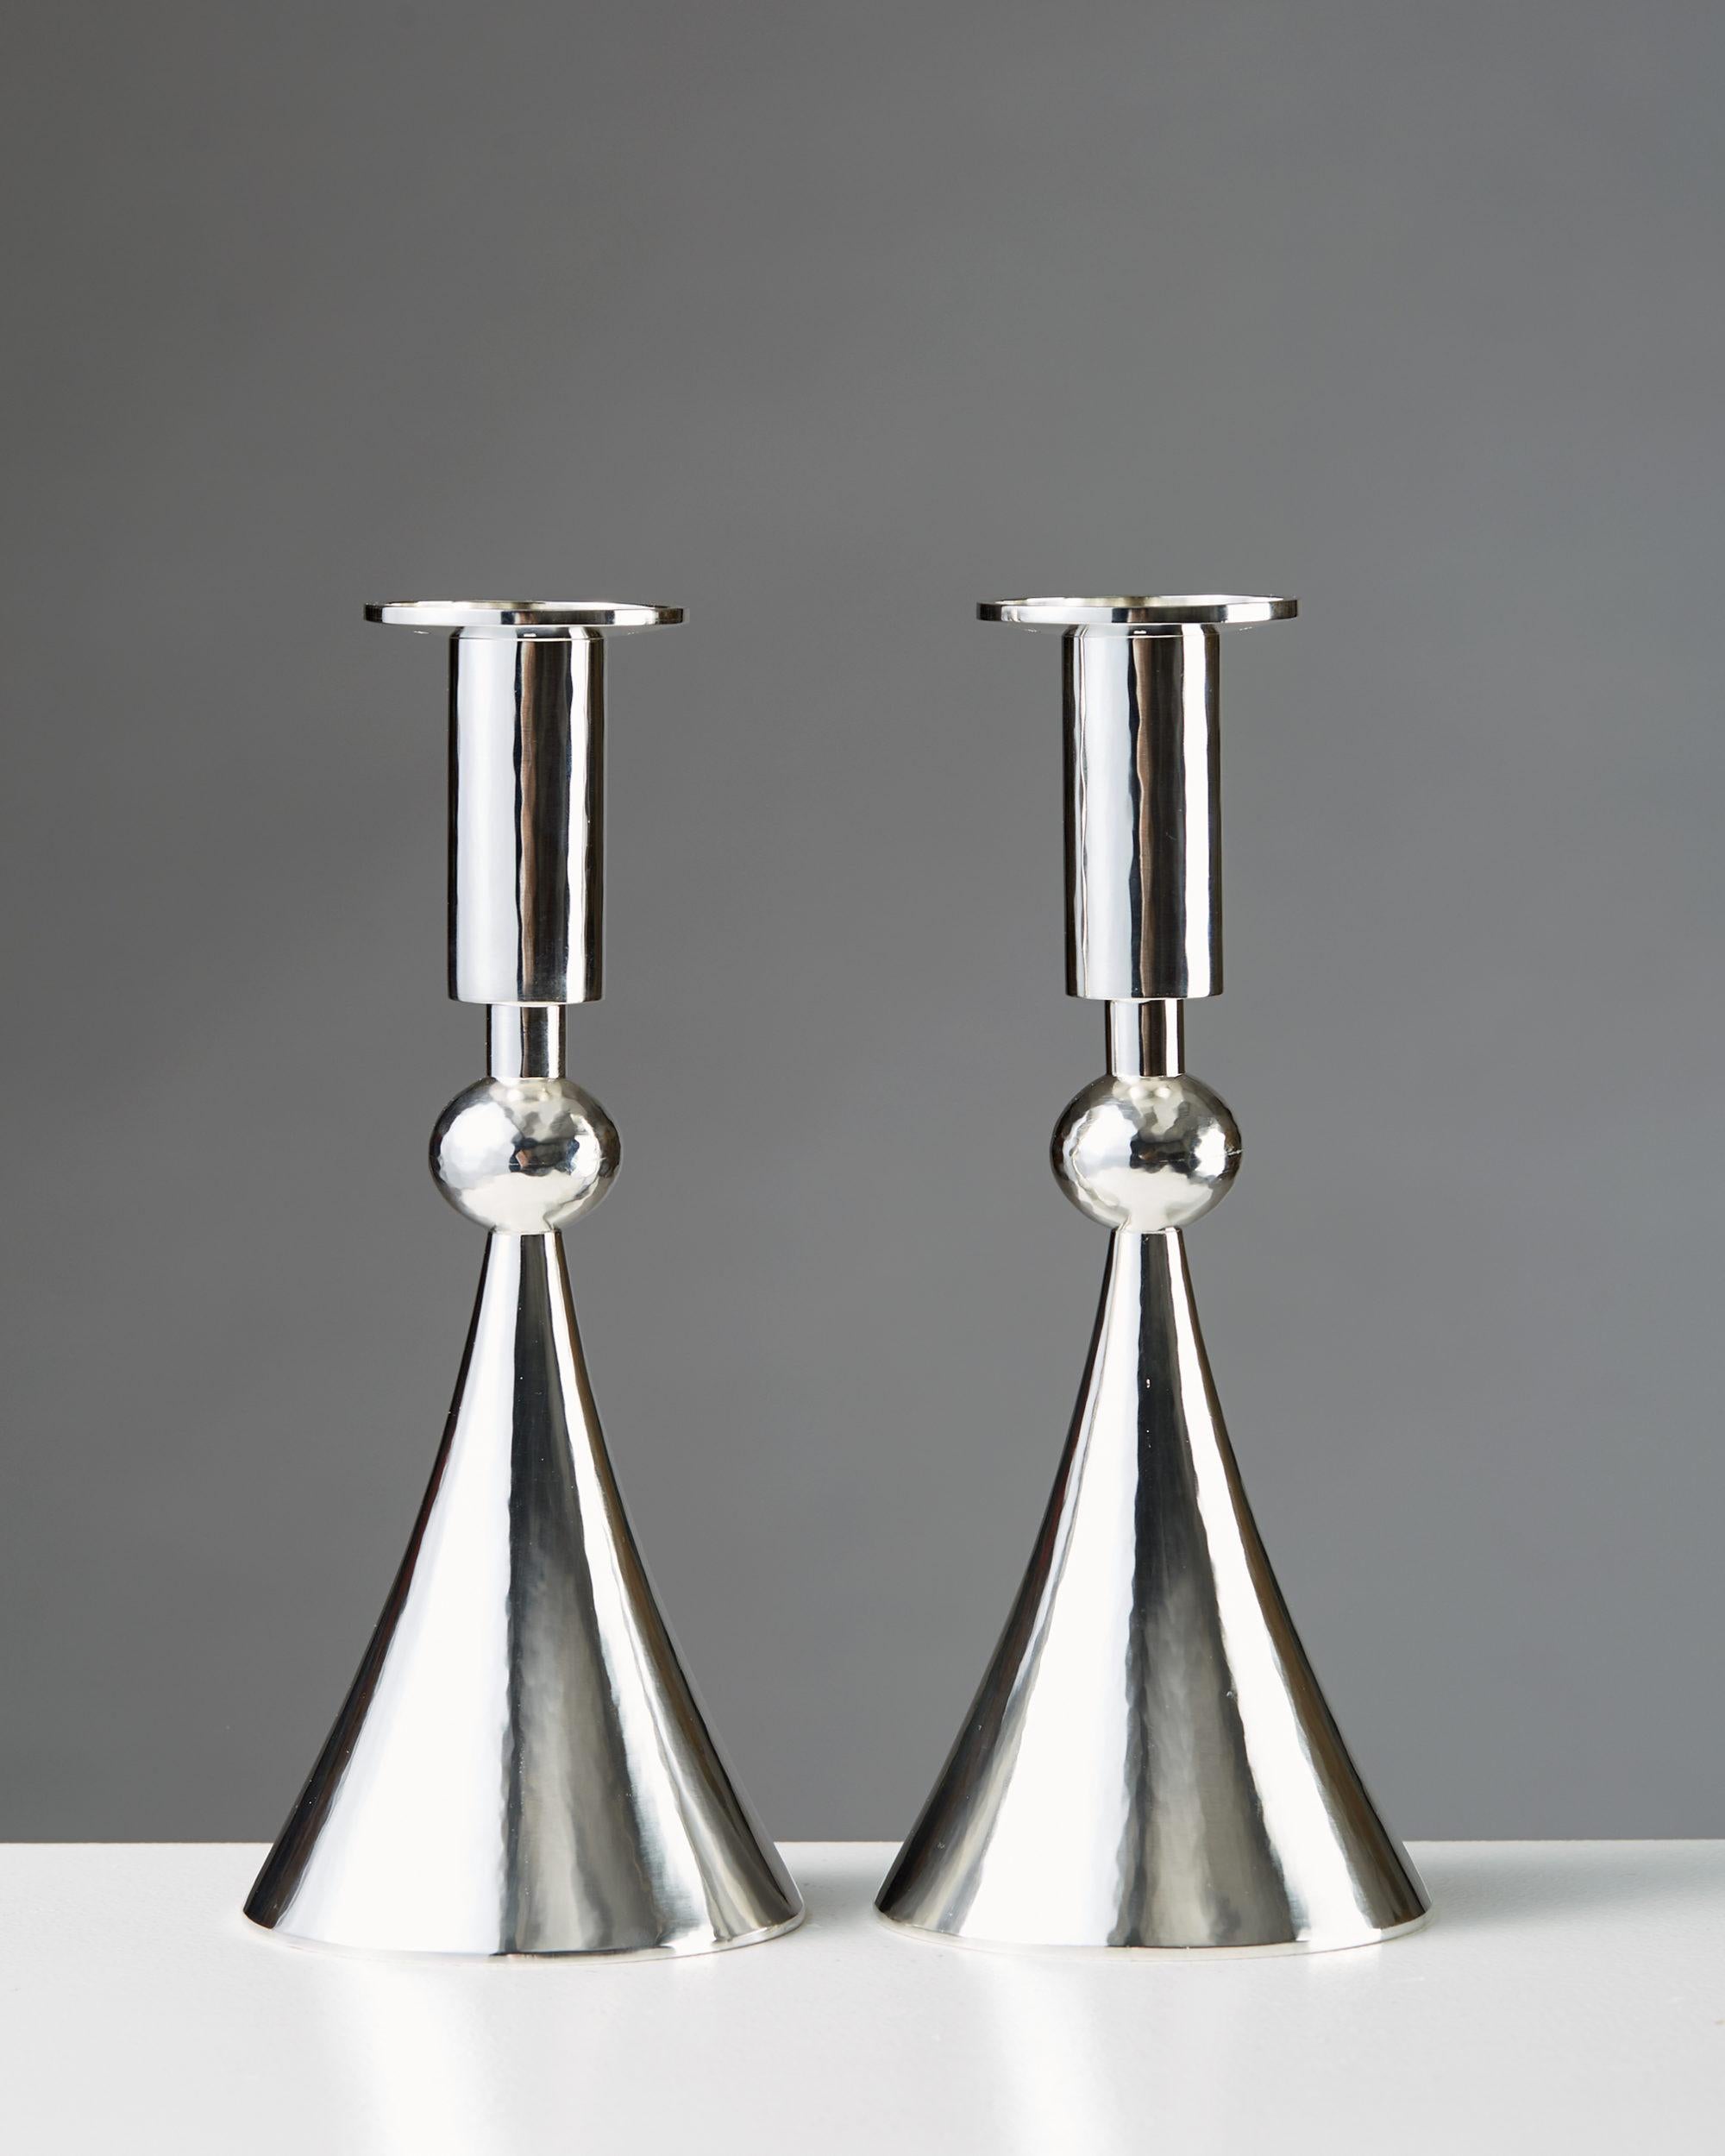 Scandinavian Modern Pair of Candlesticks Designed by Sigurd Persson, Sterling Silver, Sweden, 1964 For Sale